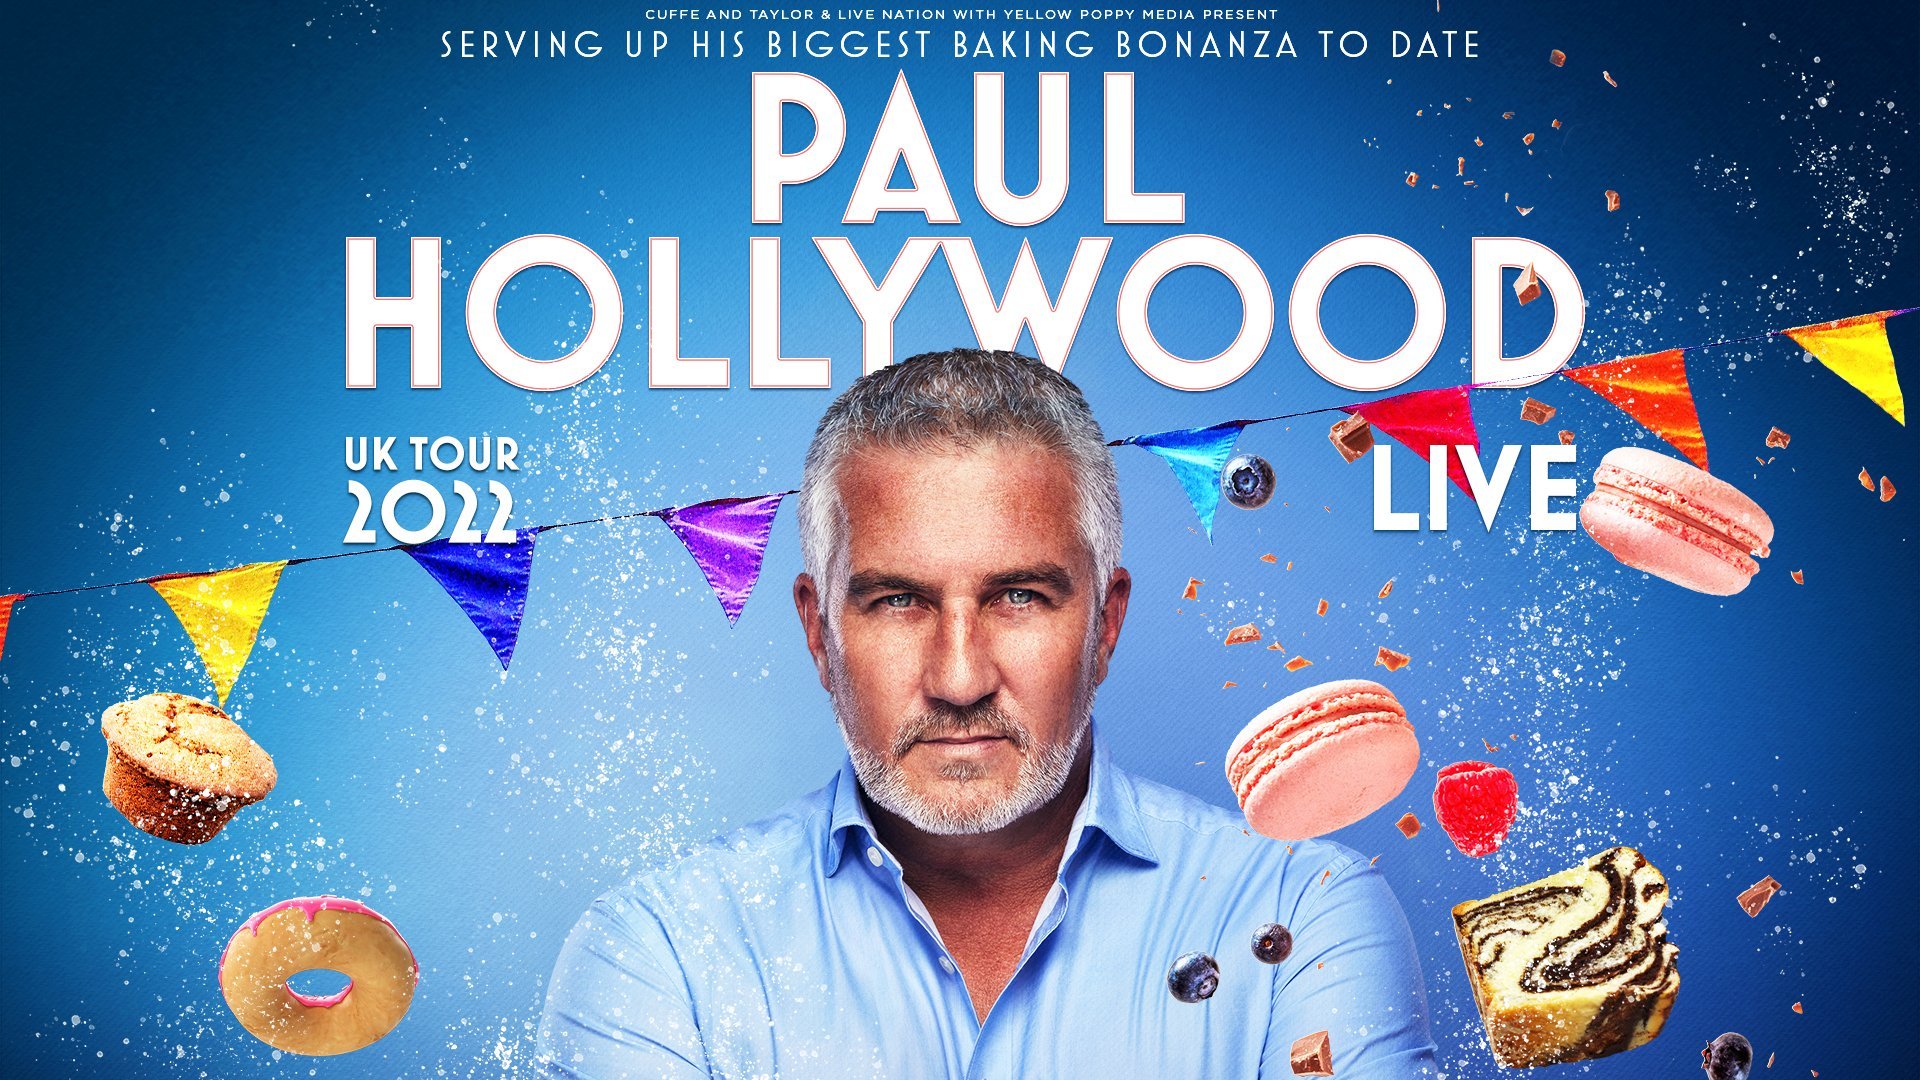 Paul Hollywood Bake Off Star Live on Tour Portrait